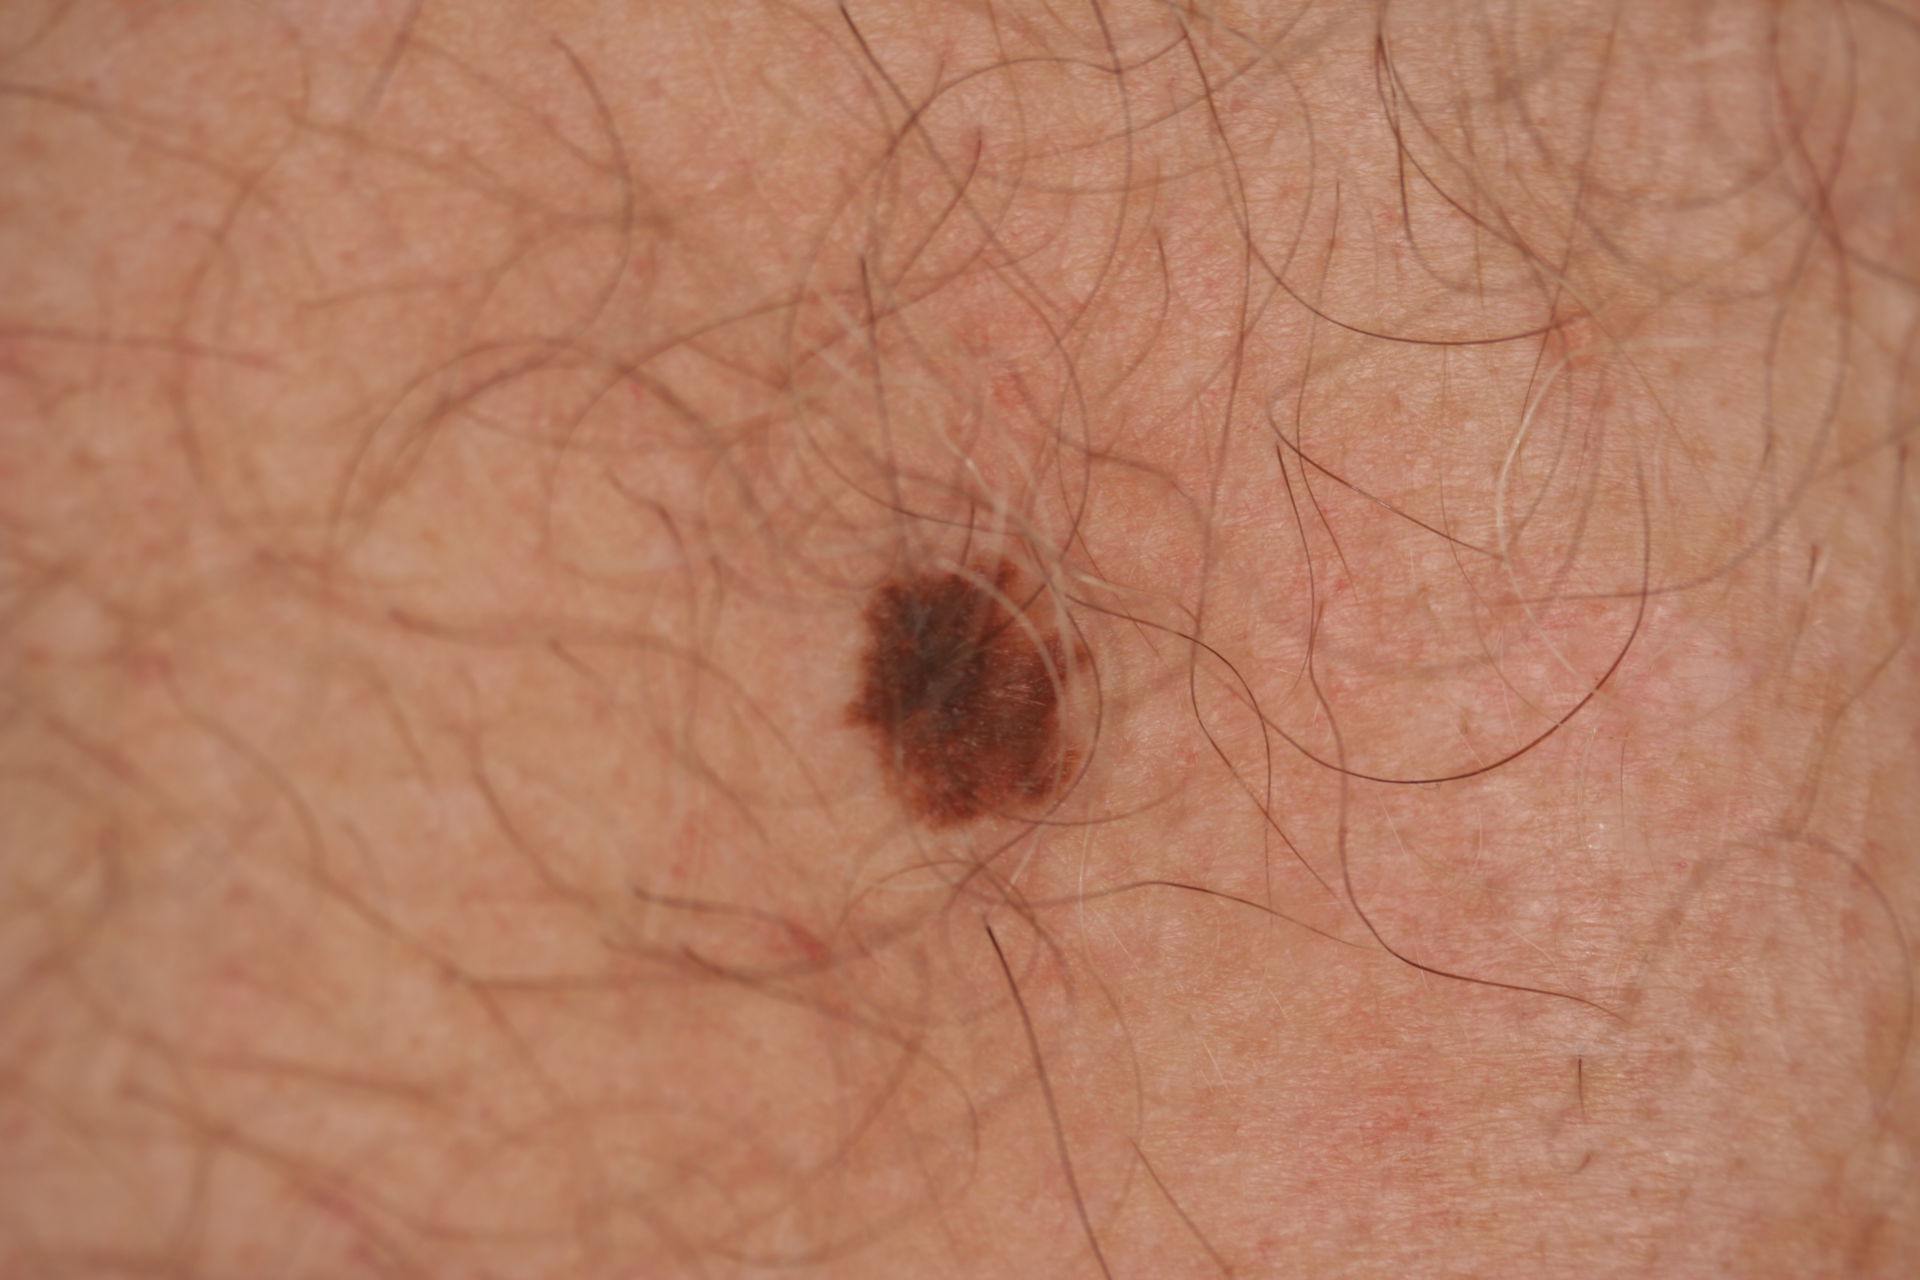 Skin cancer or melanoma?